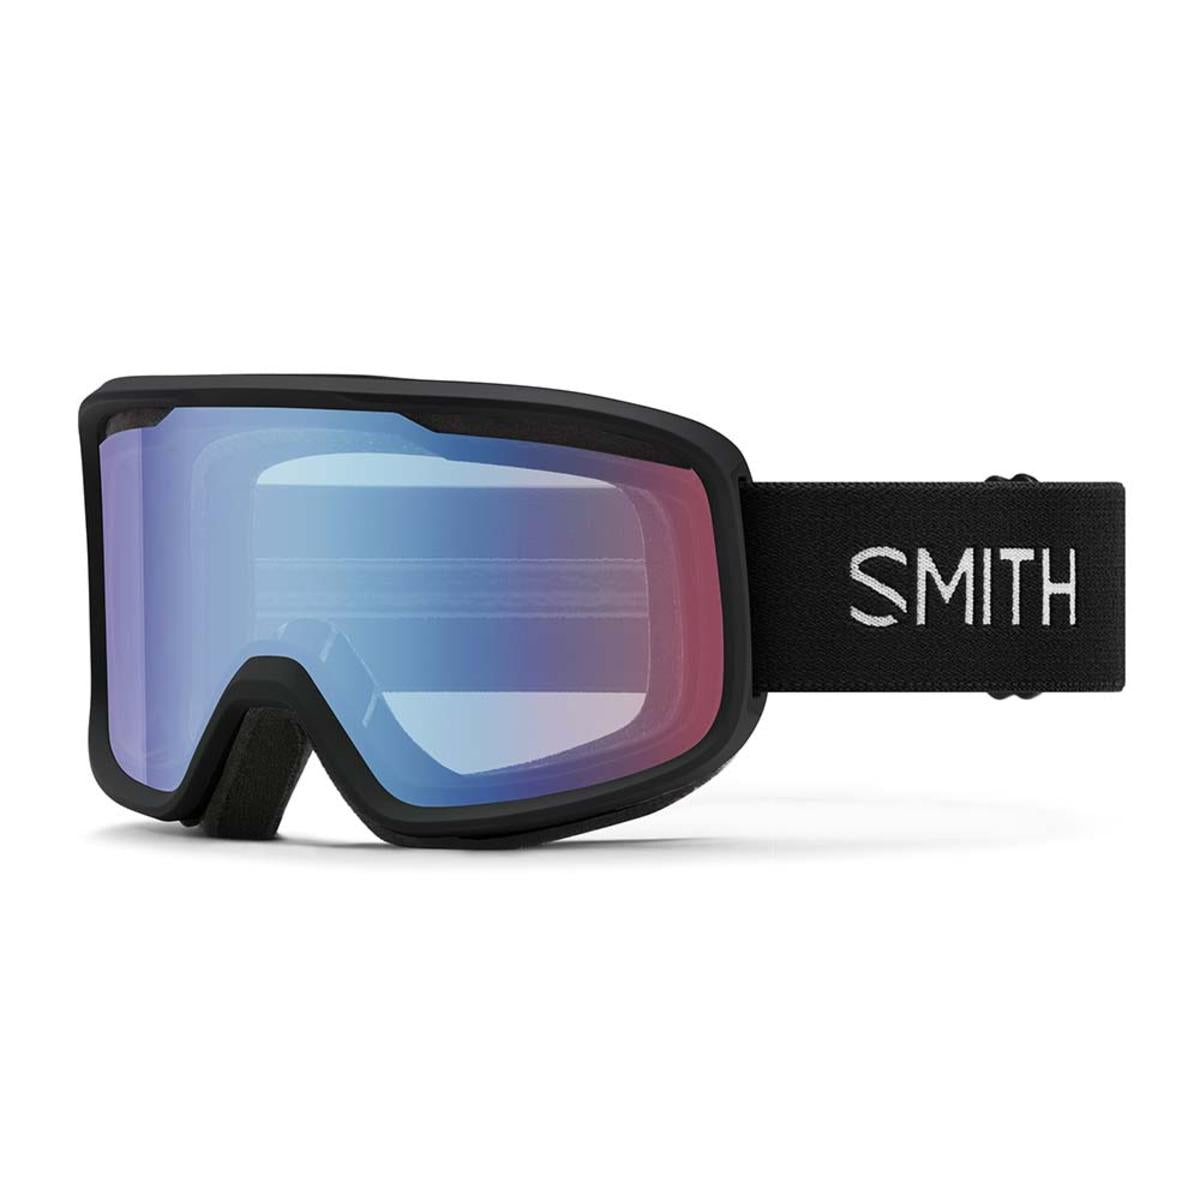 Smith Optics Frontier Goggles Blue Sensor Mirror - Black Frame